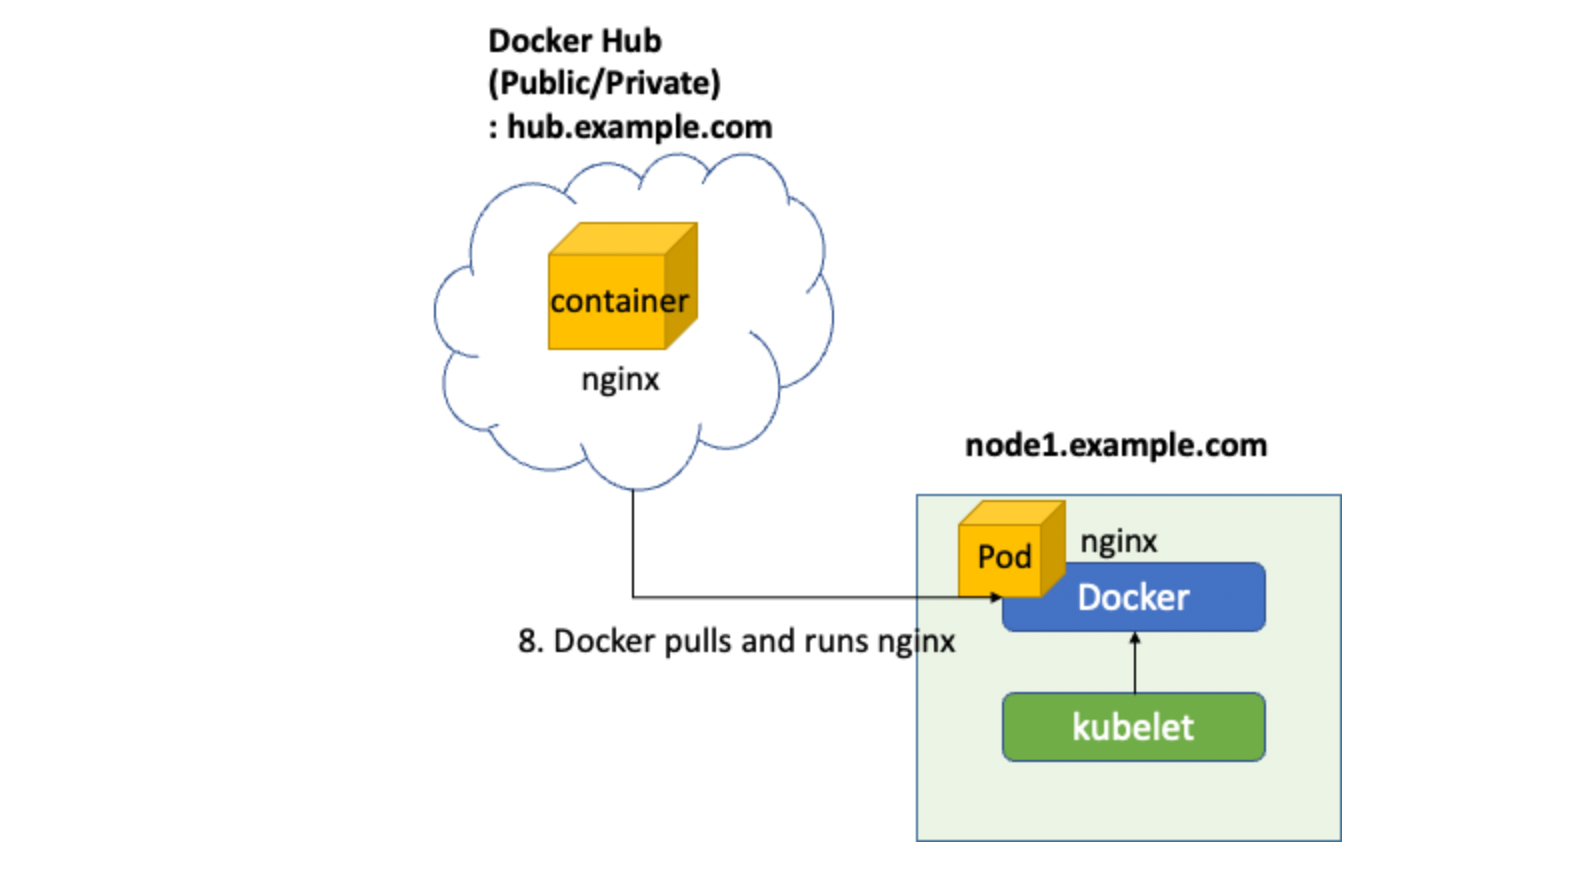 Docker pulls and runs nginx